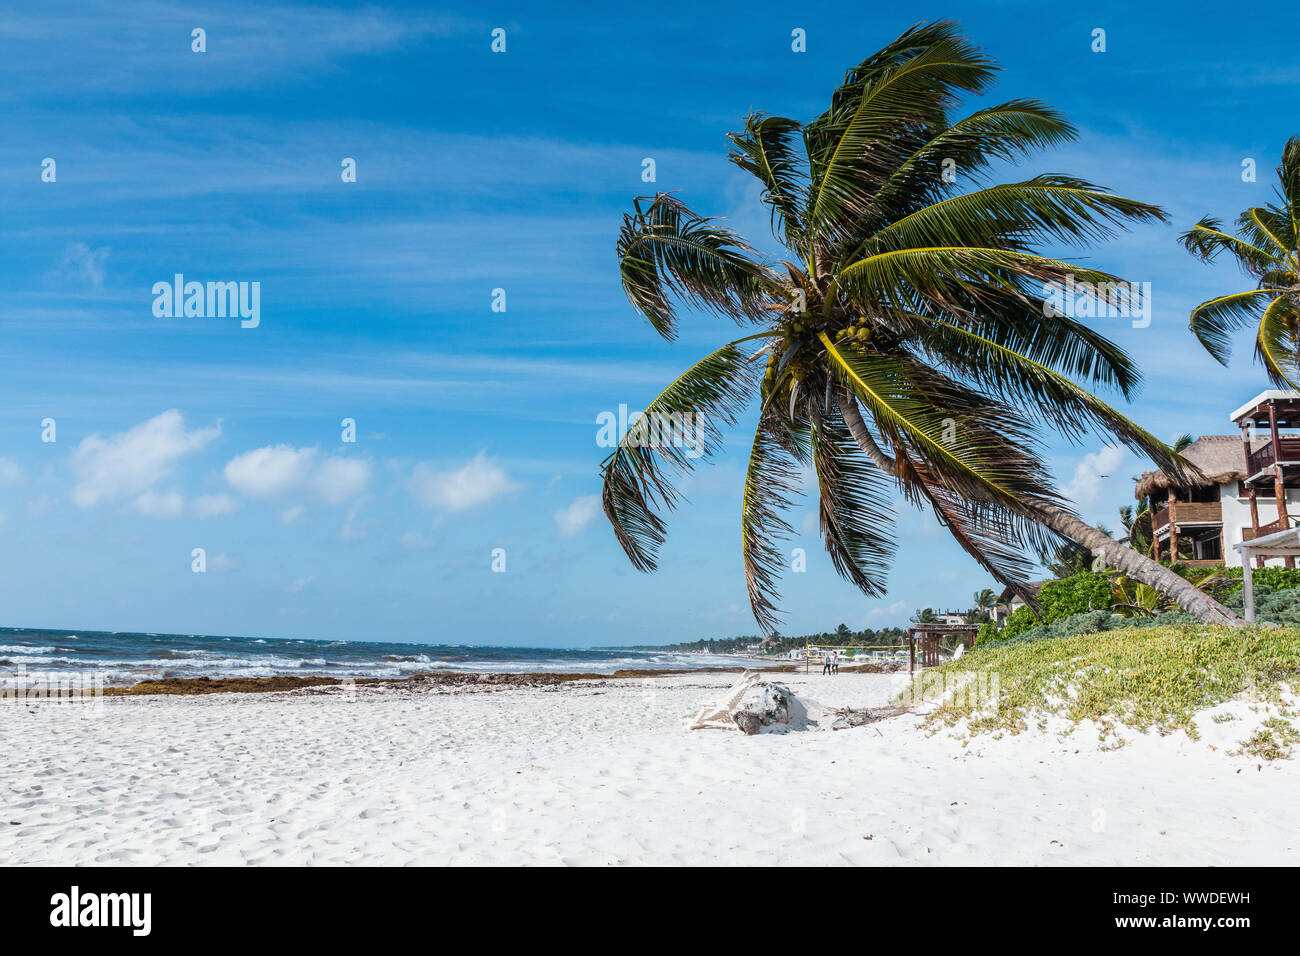 Tulum, Yucatan, Riviera Maya. Tulum beach with beautiful palm trees, Caribbean Sea in Mexico. Stock Photo